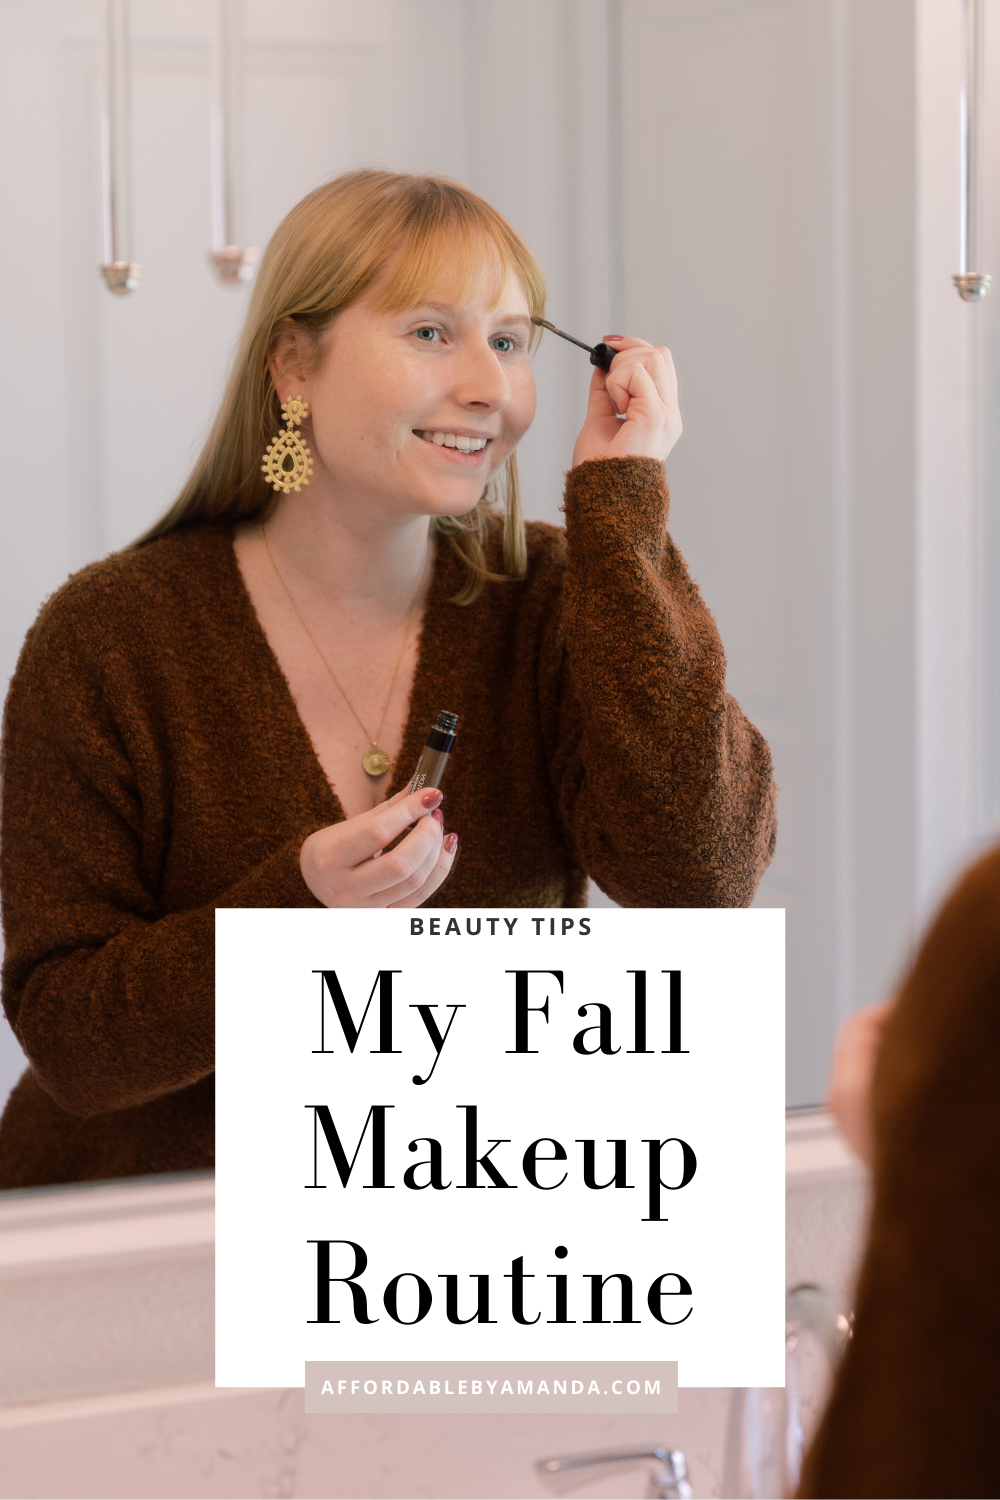 Fall Makeup Palettes 2021 | Fall Eyeshadow Looks 2021 | Lawless Beauty Eyeshadow Palette Review | Fall Makeup Routine | Makeup Looks